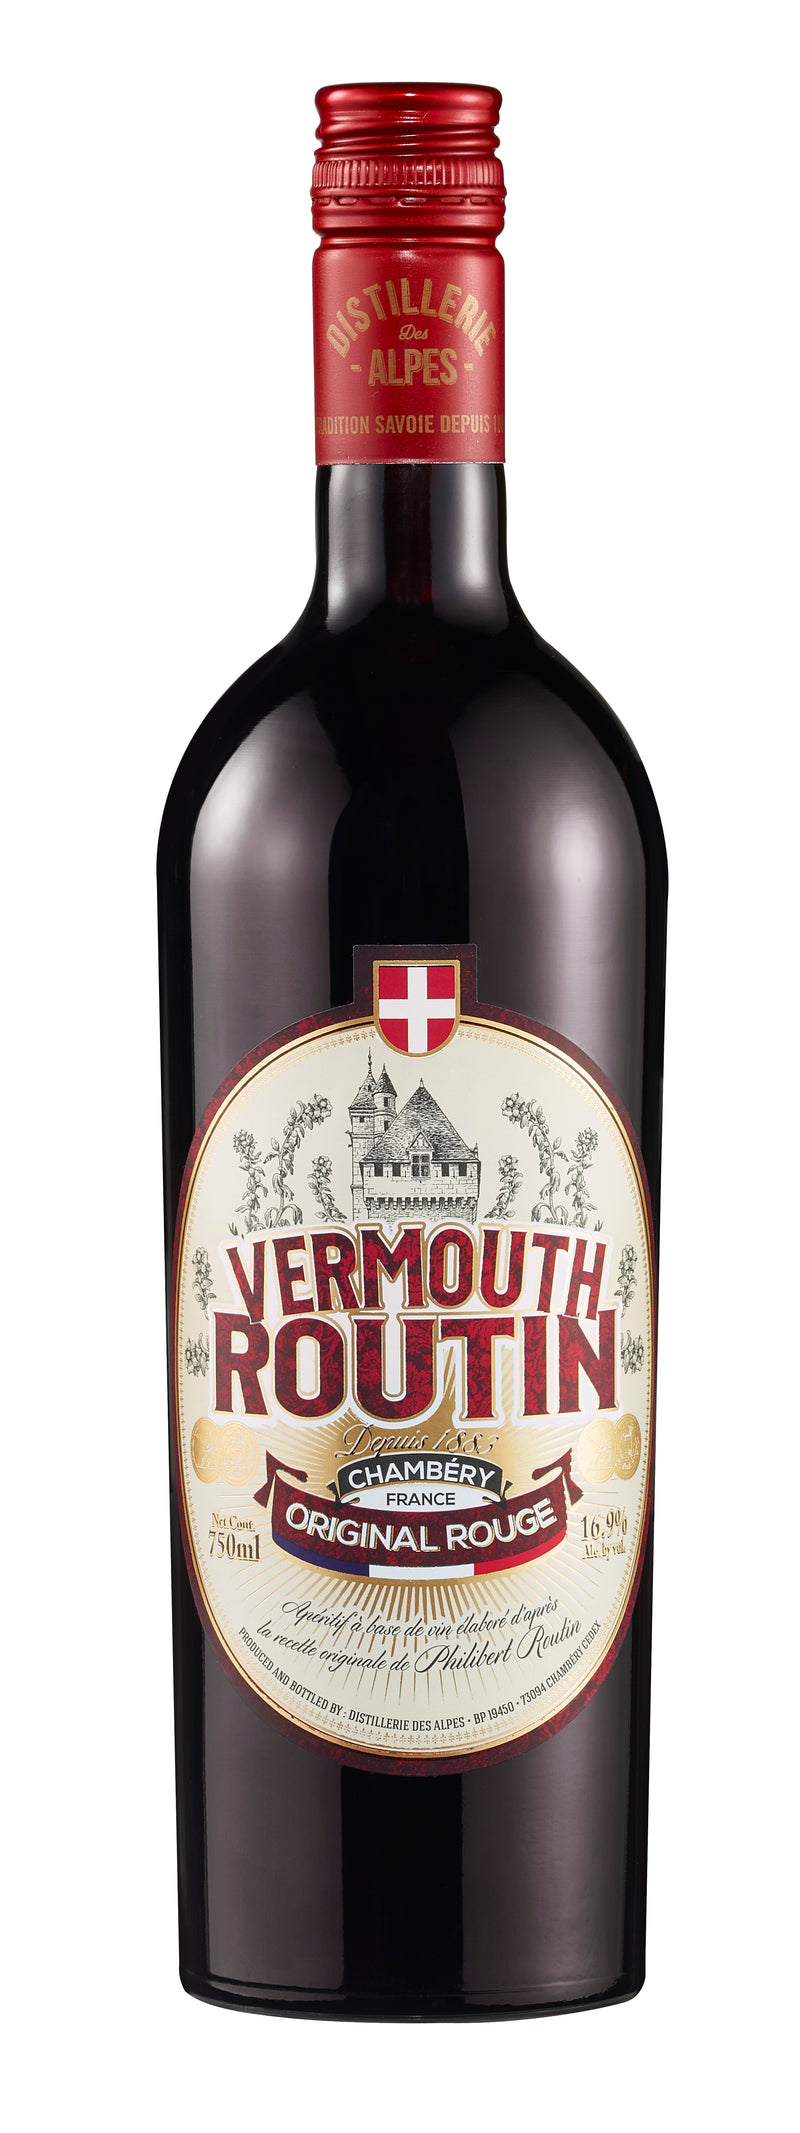 Routin Vermouth Rouge